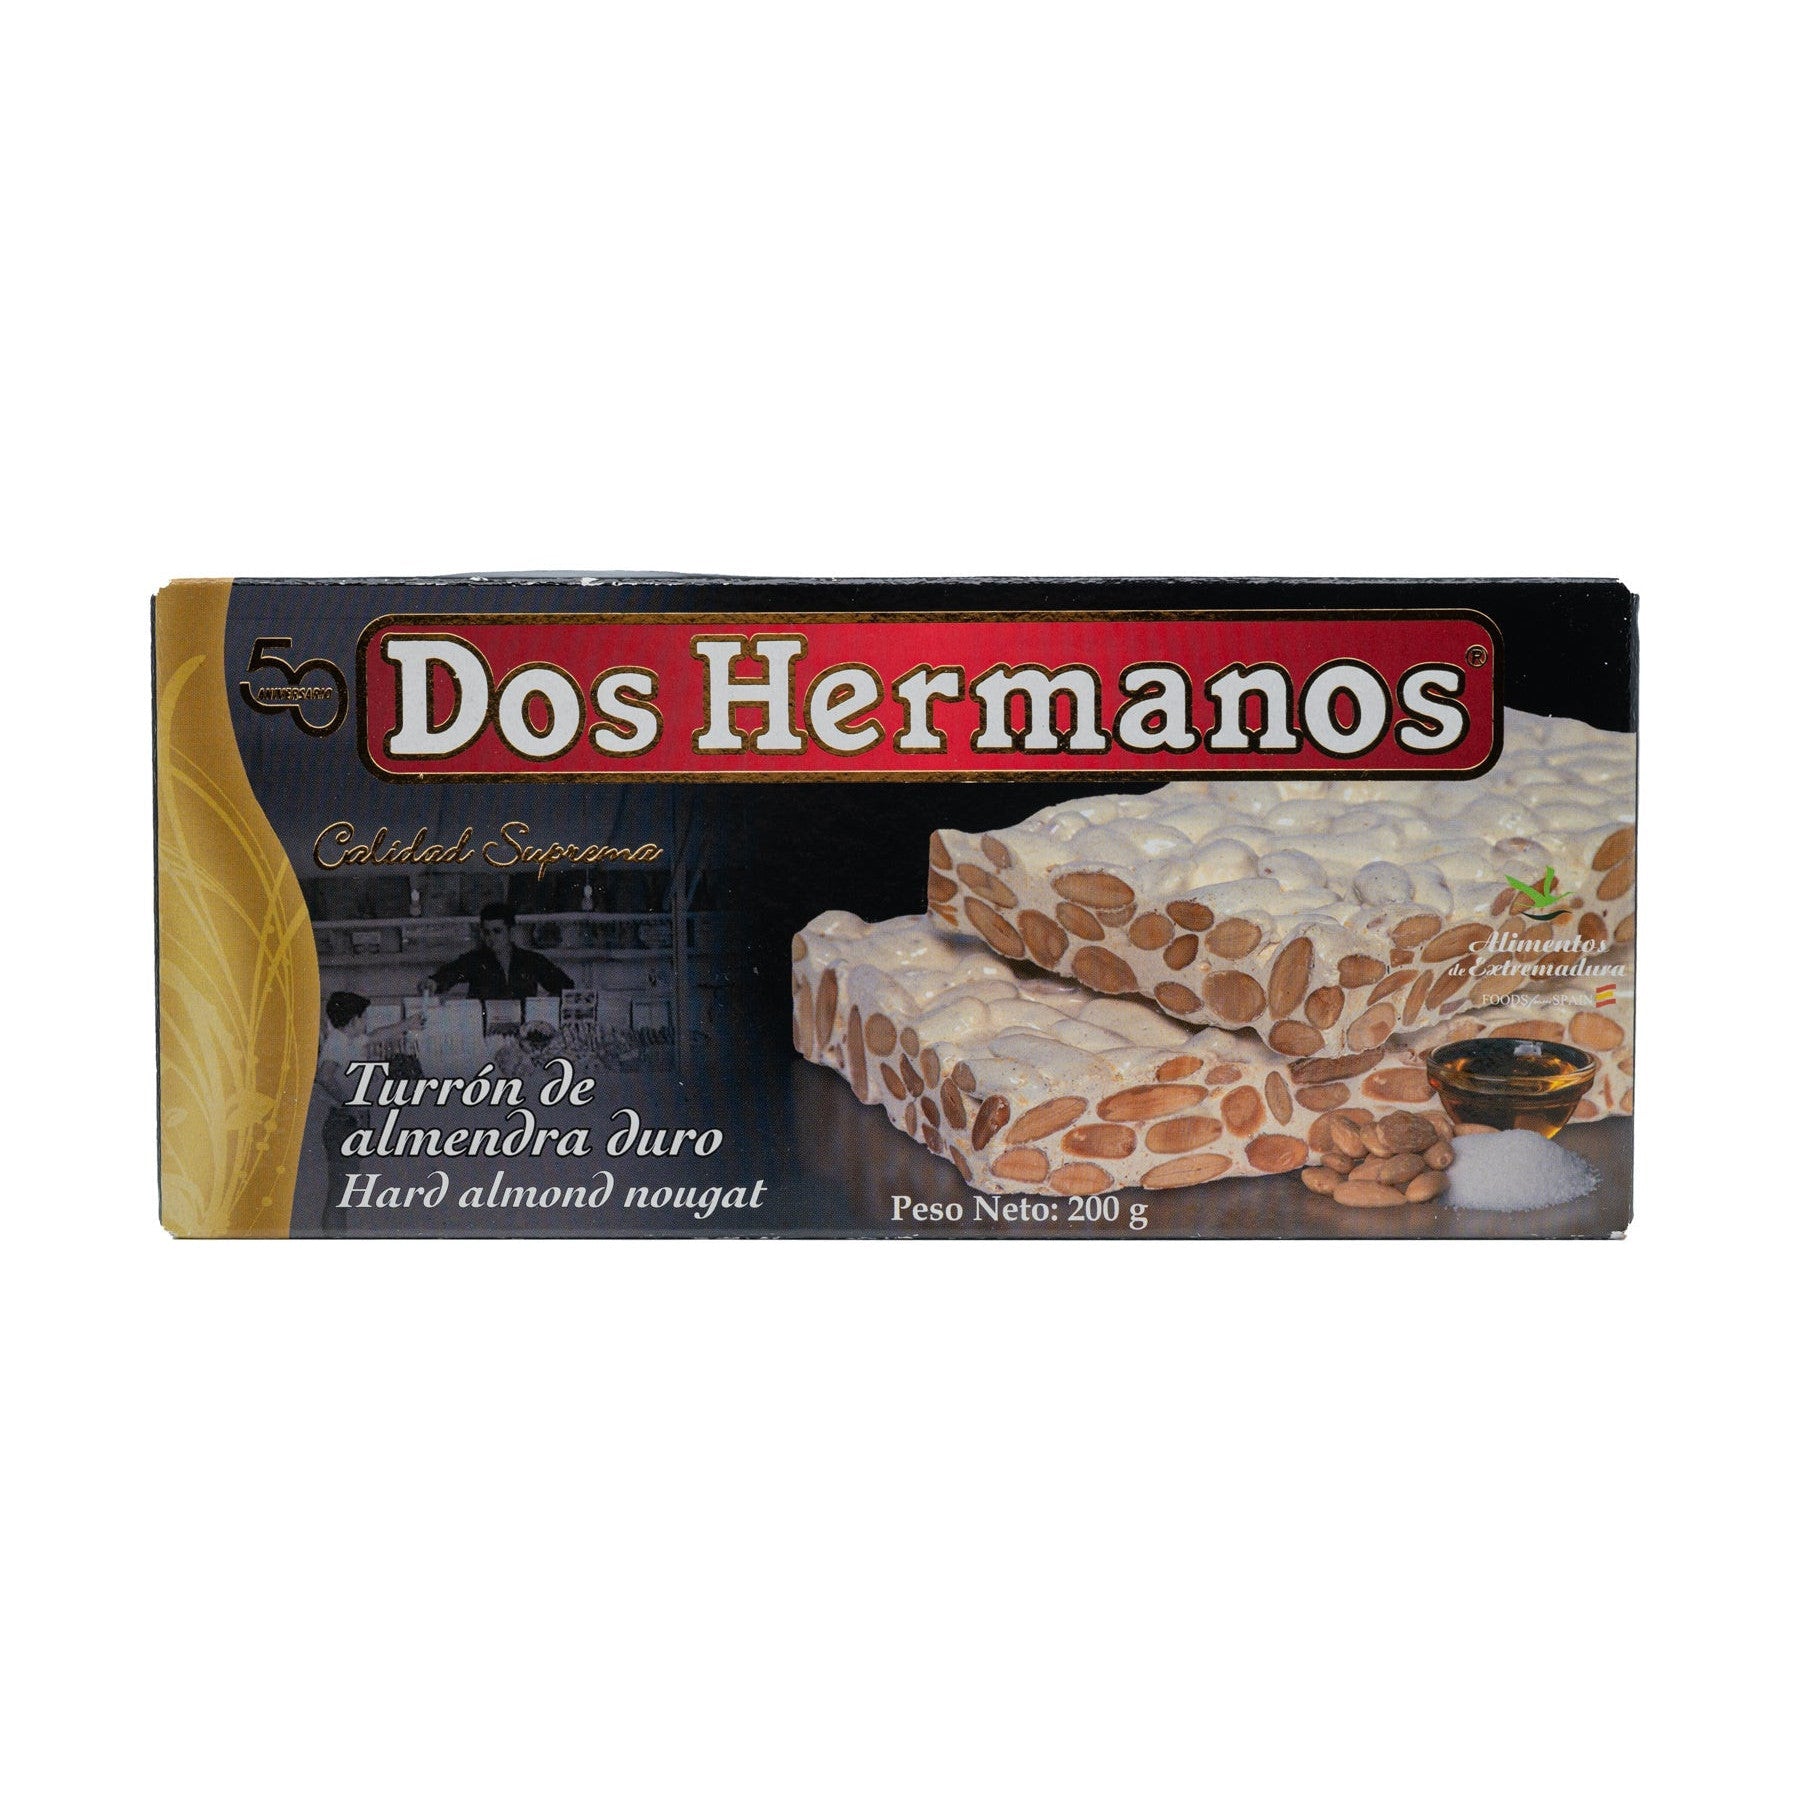 Nougat mit Mandeln "hart", Turron de almendra duro (200g) - Gourmet Markt - Dos Hermanos